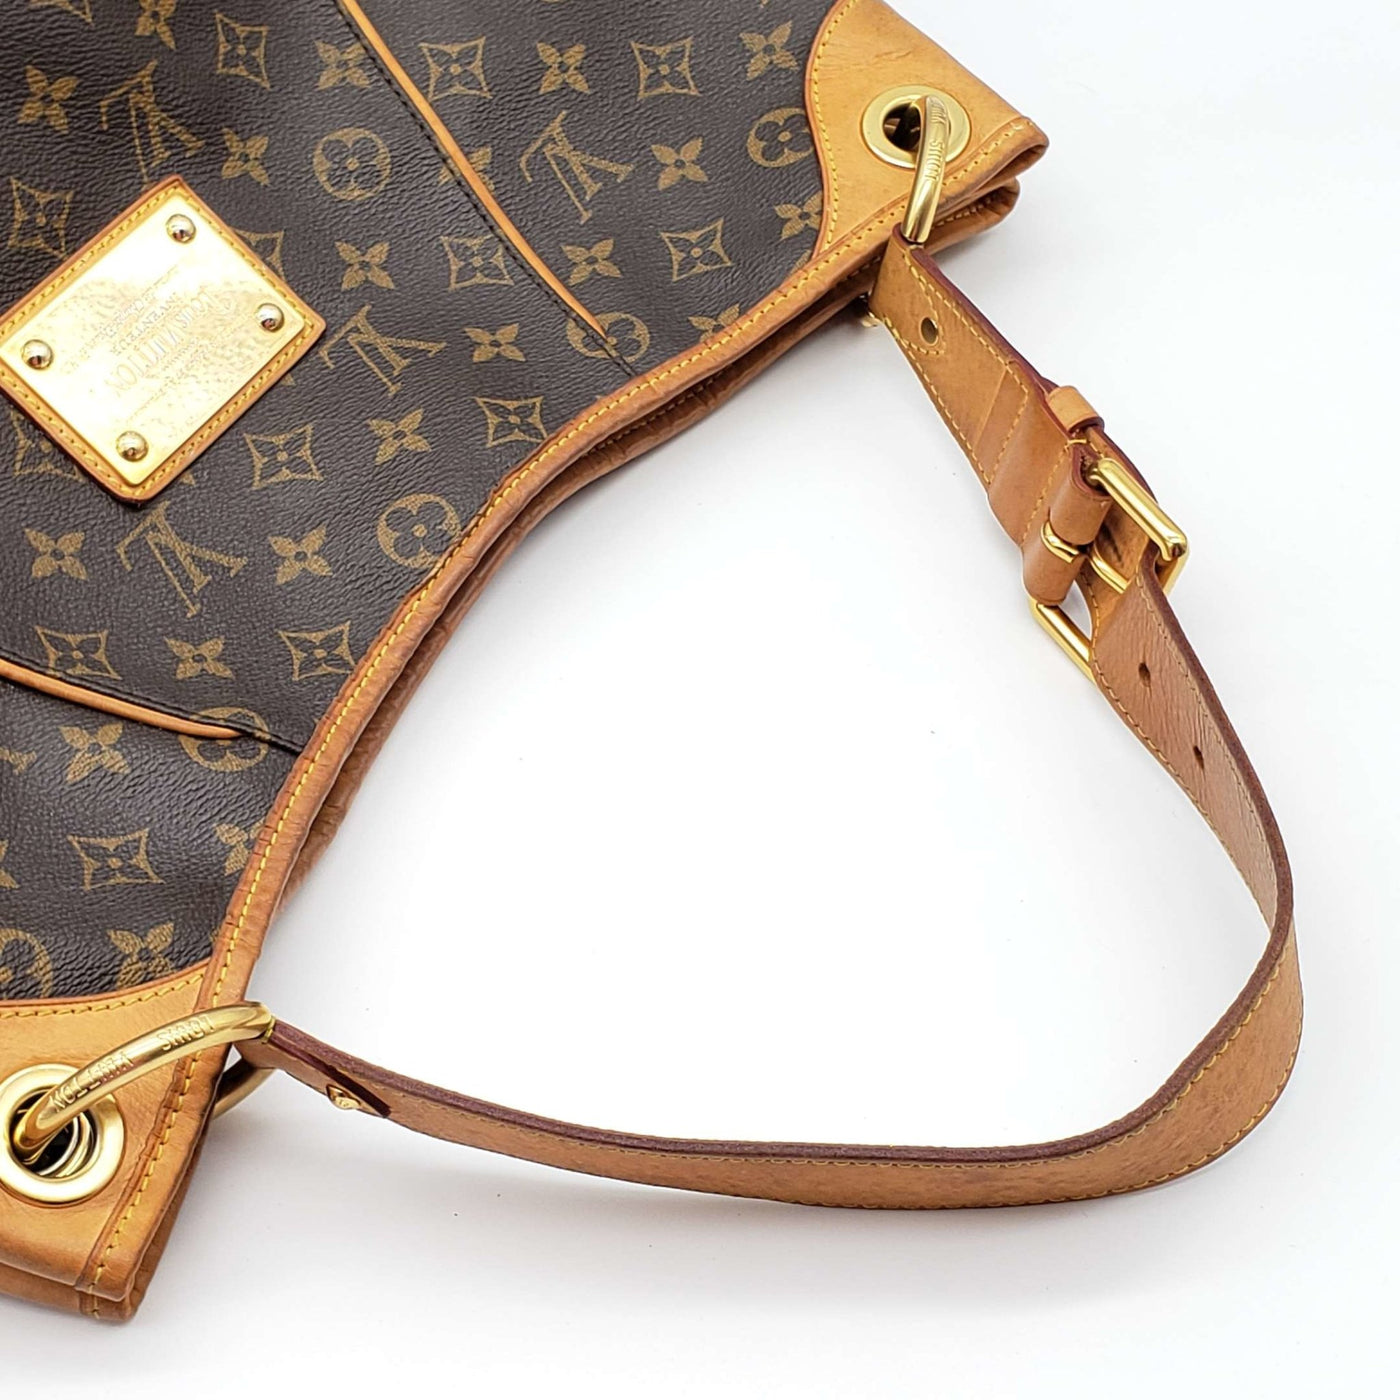 Louis Vuitton Galliera GM Monogram Tote Bag - Luxury Cheaper